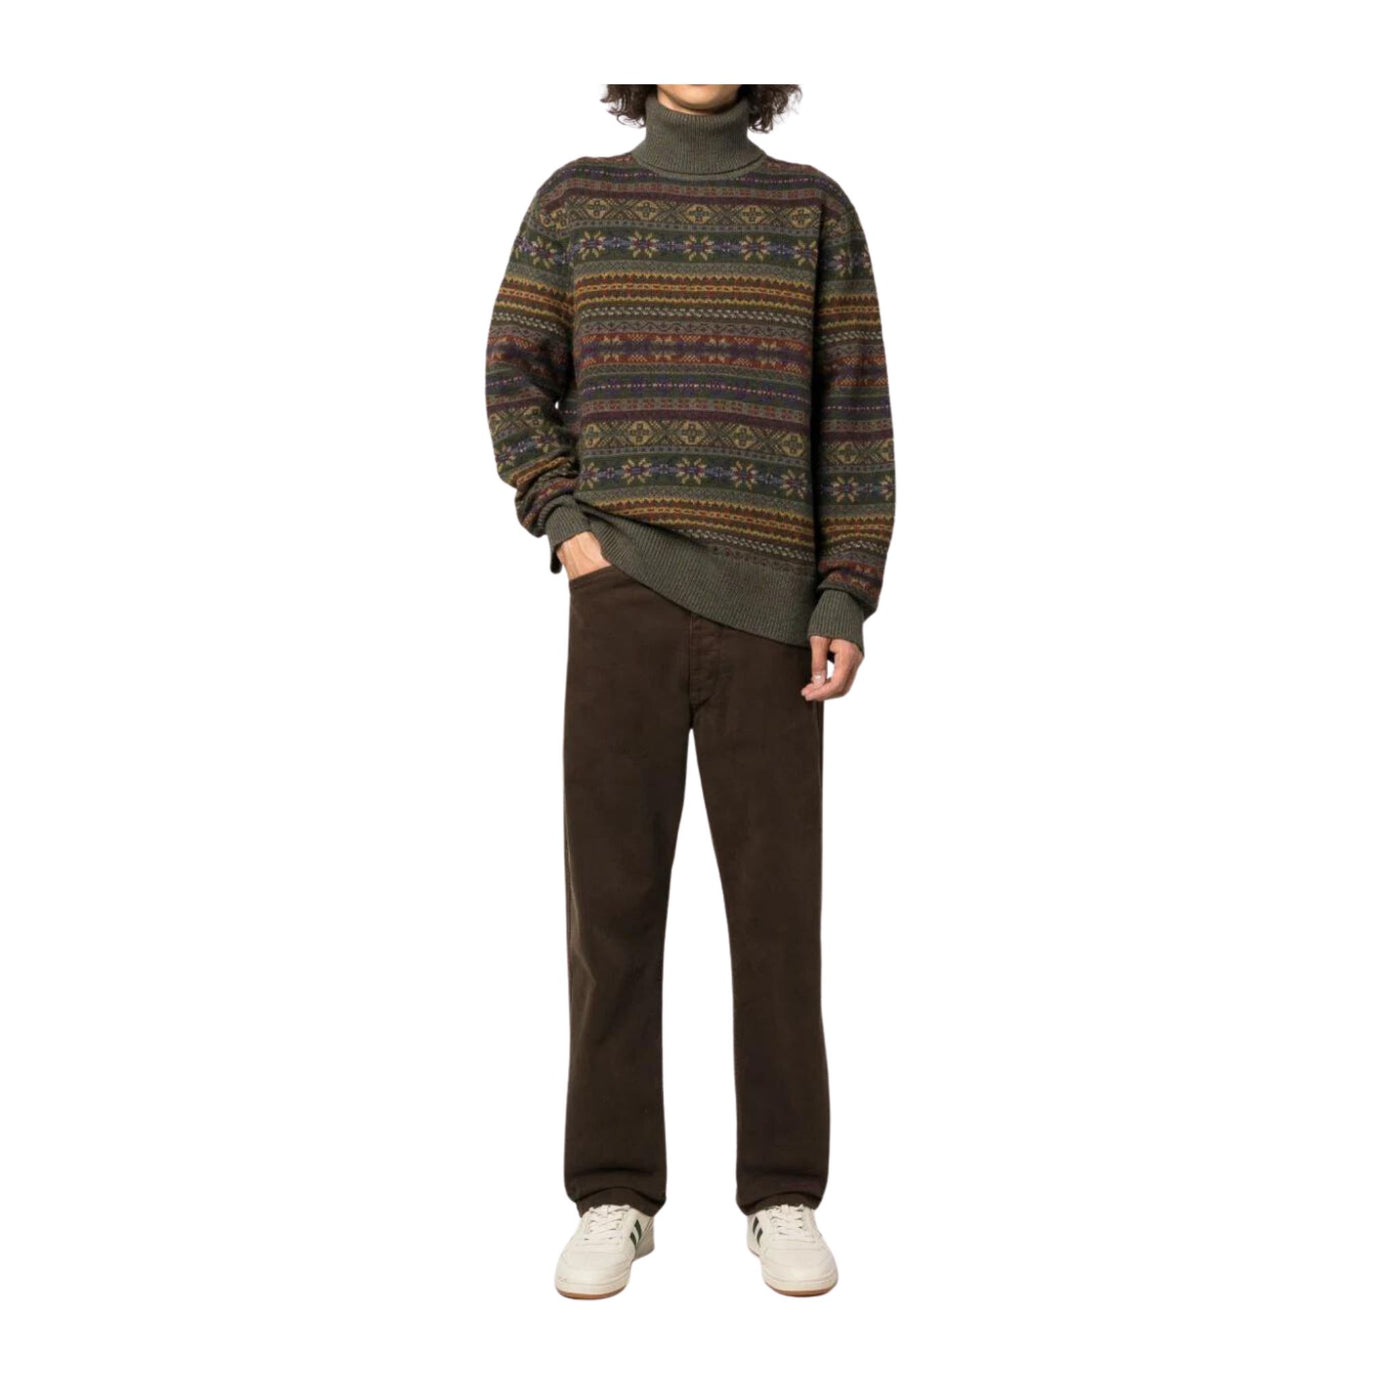 Men's high-neck wool sweater